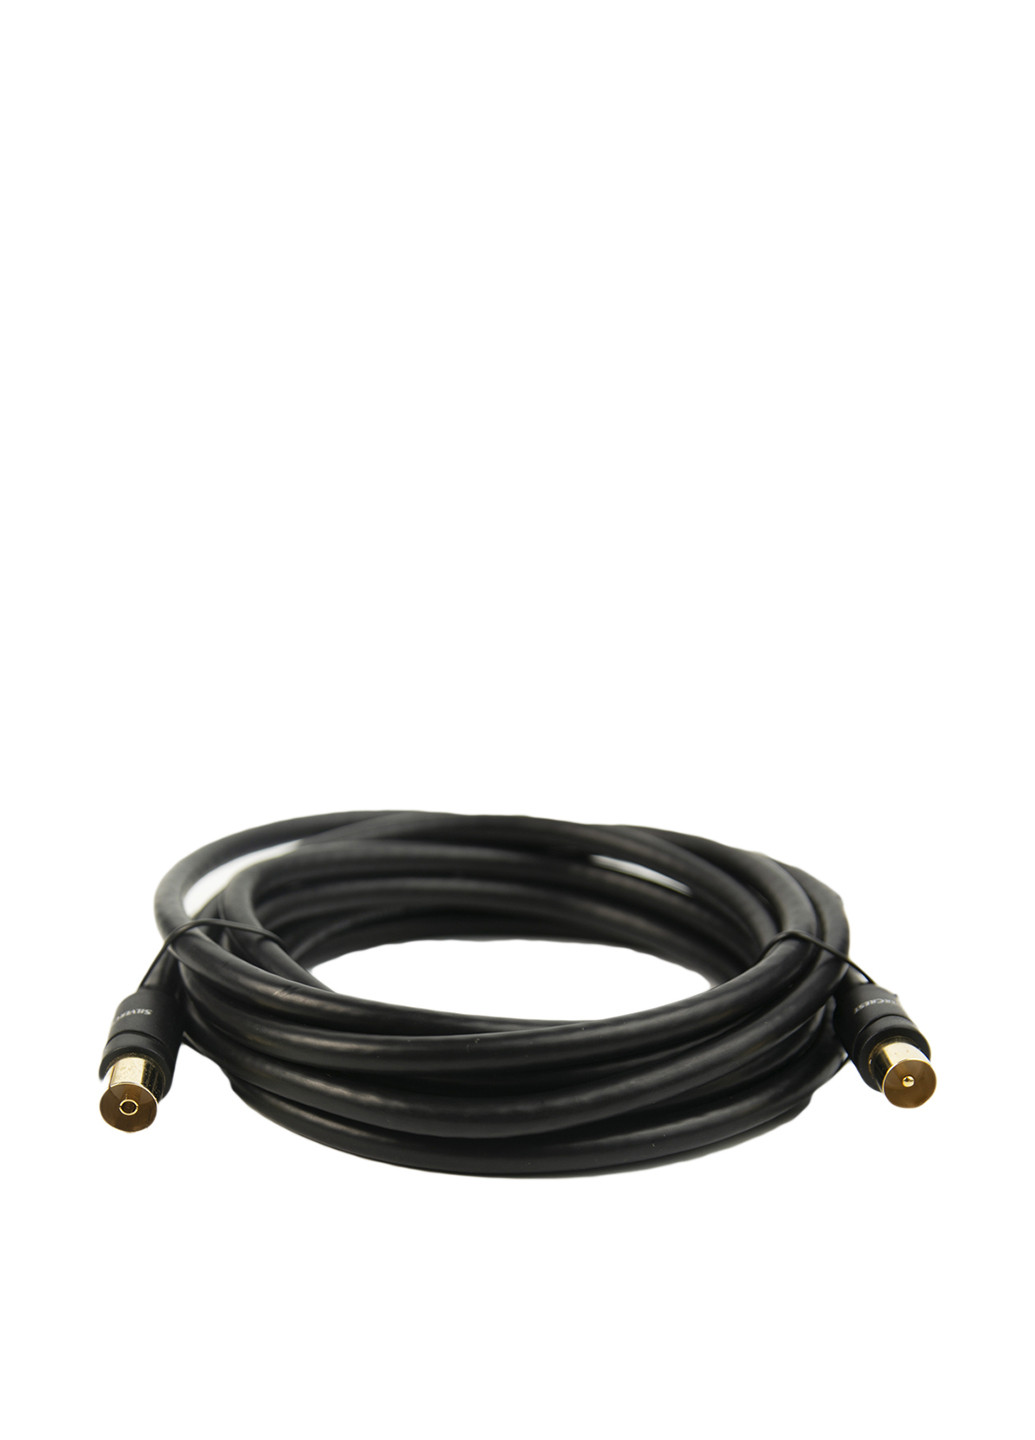 Антенный кабель HG03099 Silver Crest чёрные